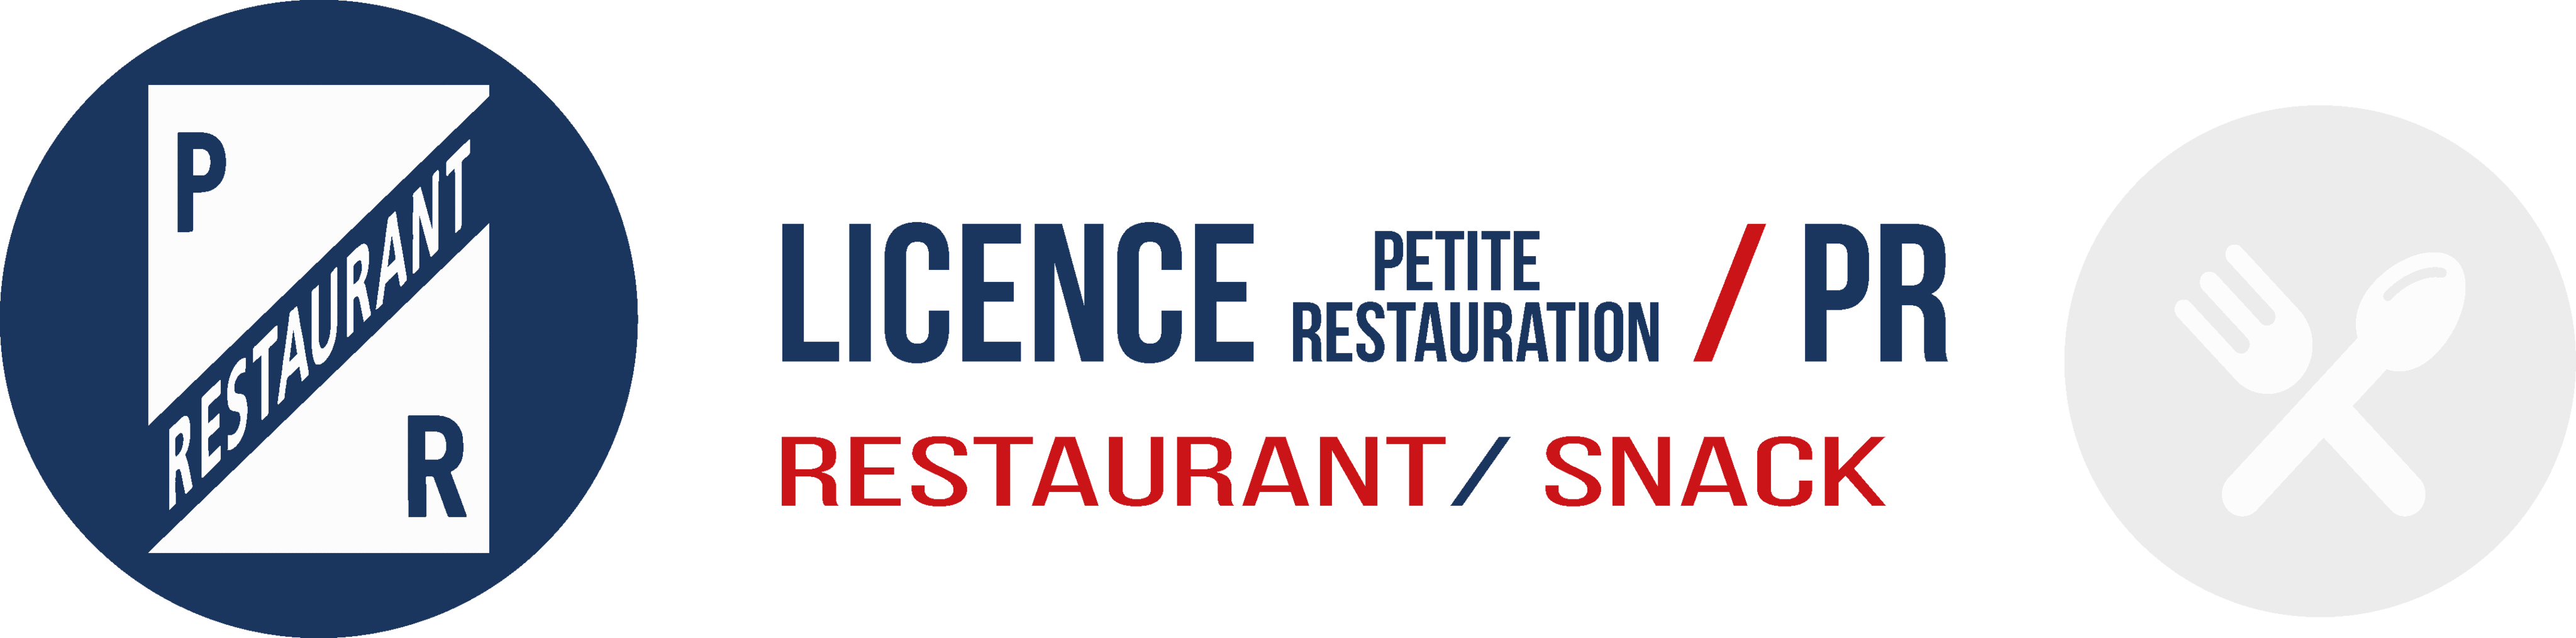 Licence PR (Petite Restauration)